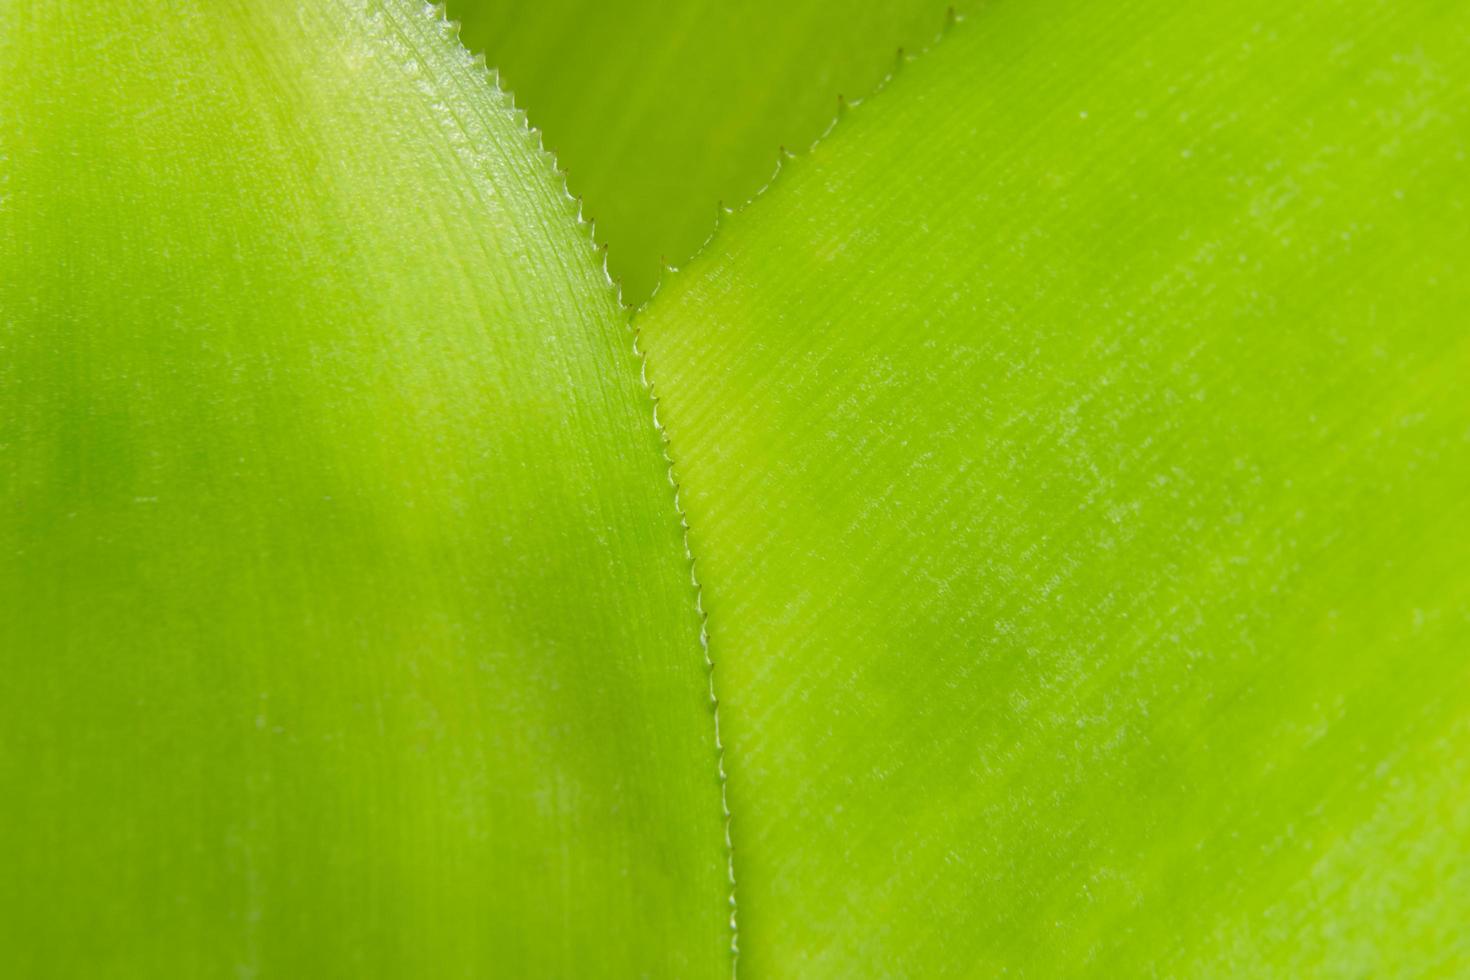 Leaf pattern, close-up photo